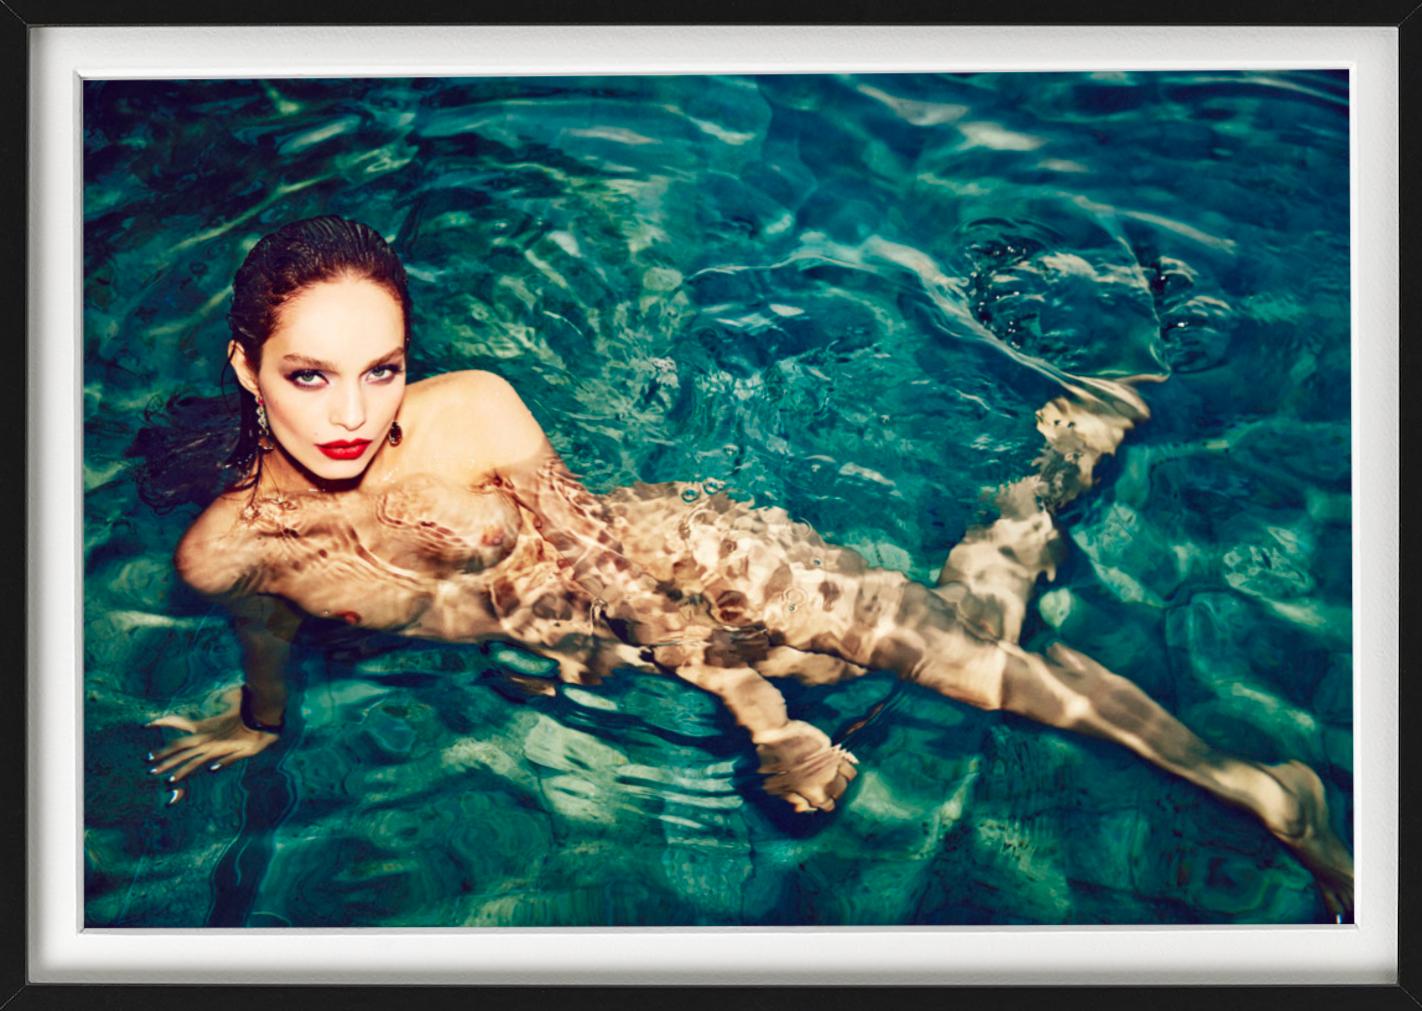 Luma Grothe for Vogue Brasil - nude model swimming underwater in blue sea - Contemporary Photograph by Ellen von Unwerth